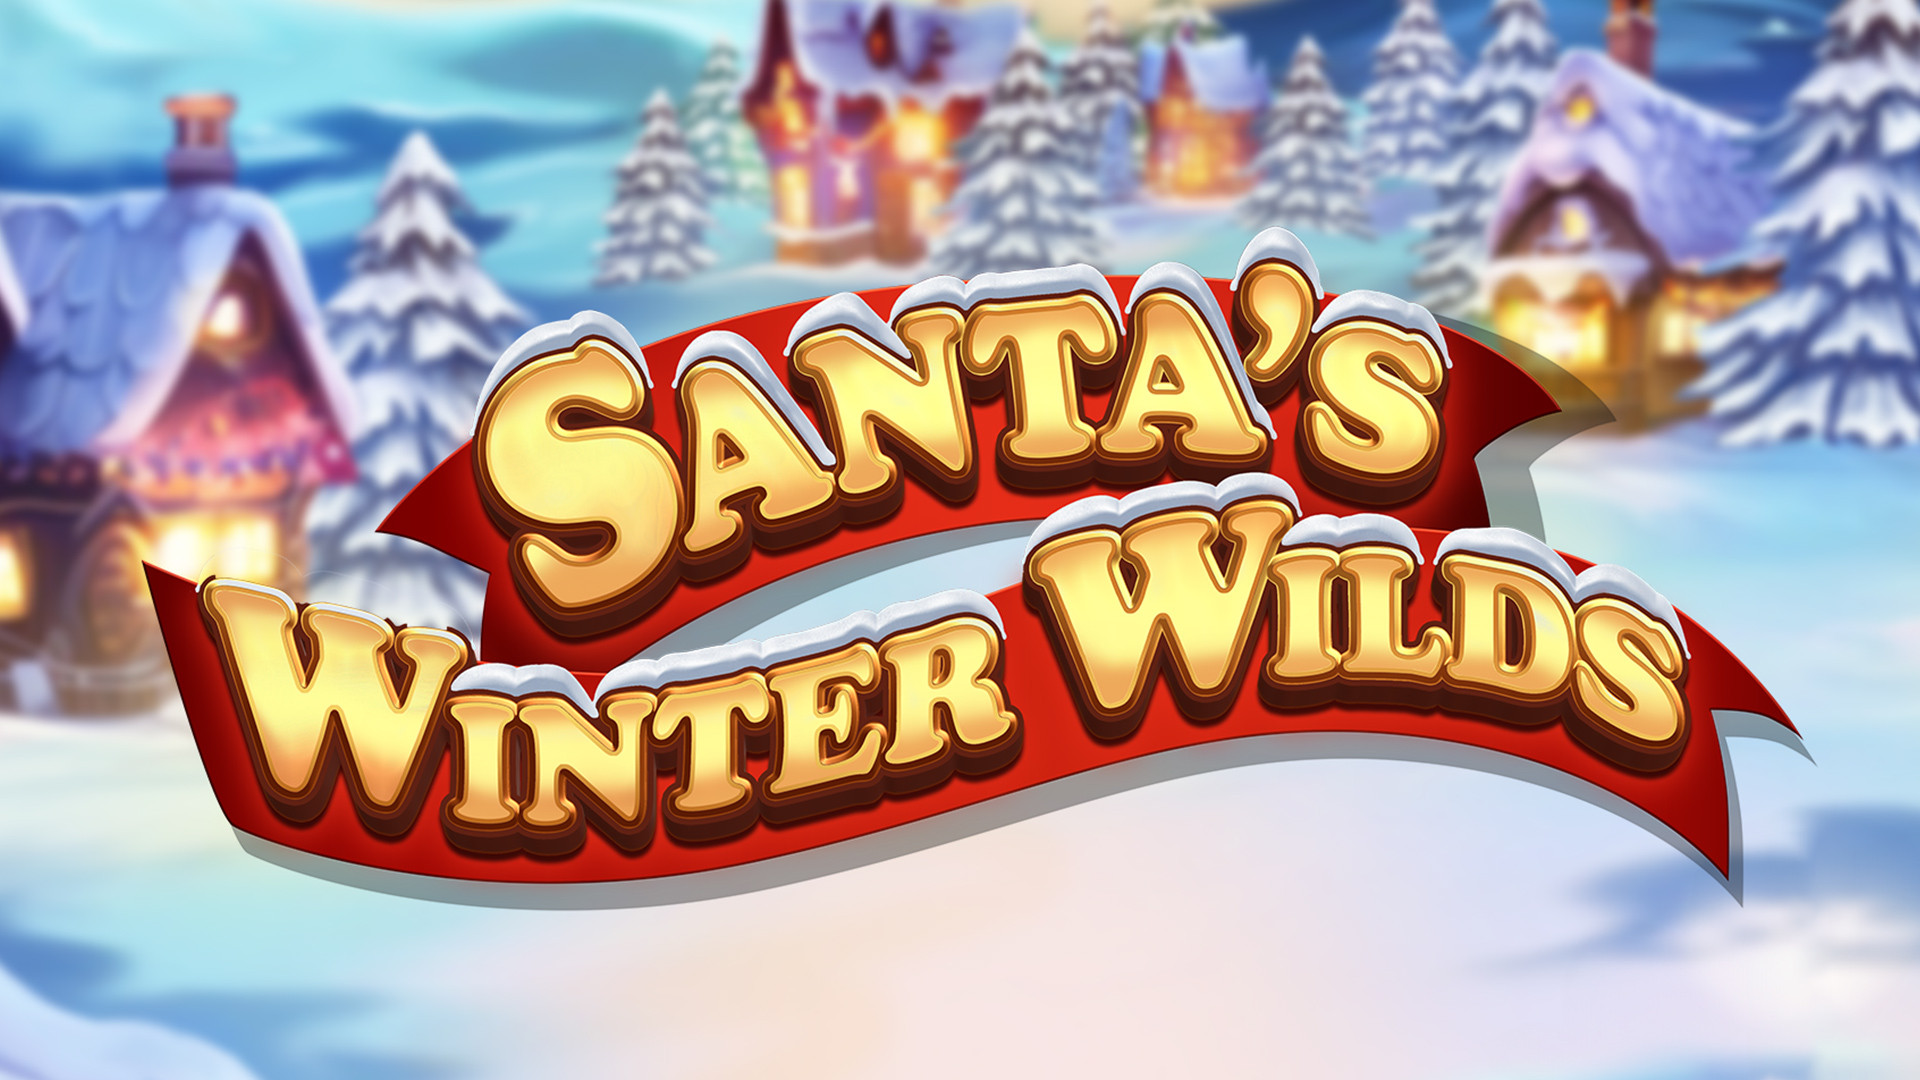 Santa's Winter Wilds